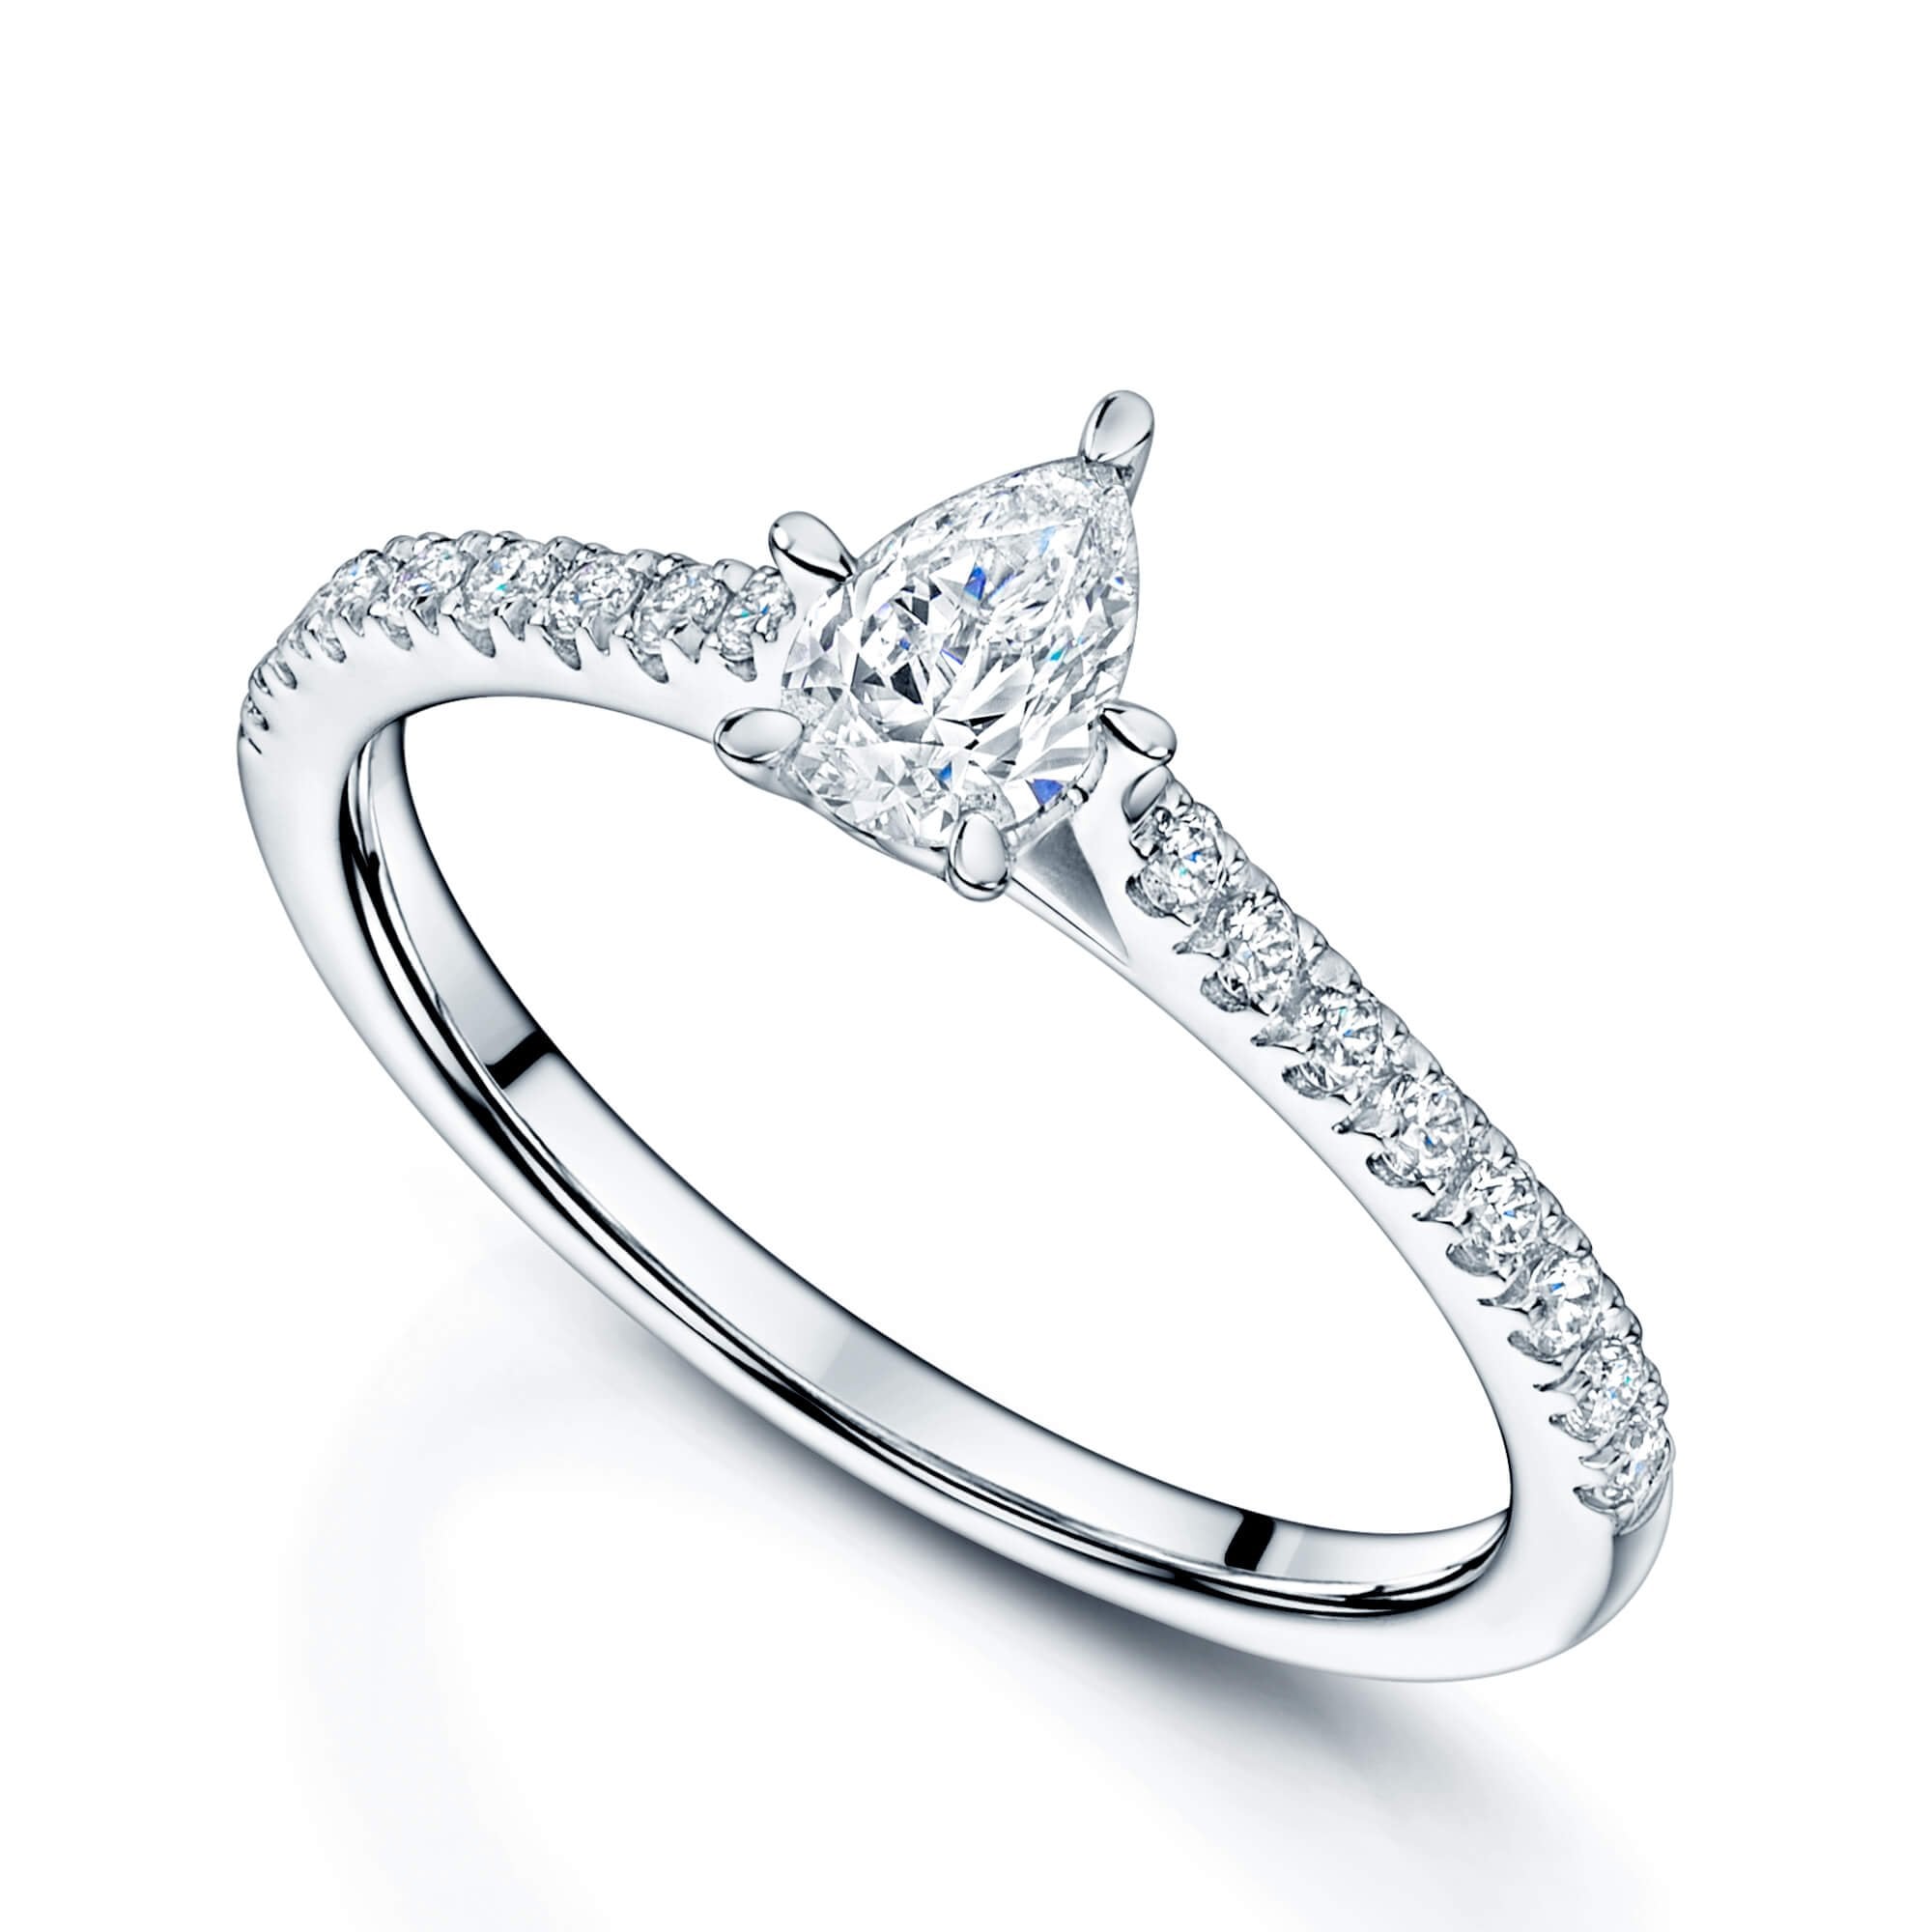 Platinum GIA Pear Cut Diamond Ring with Diamond Set Shoulders